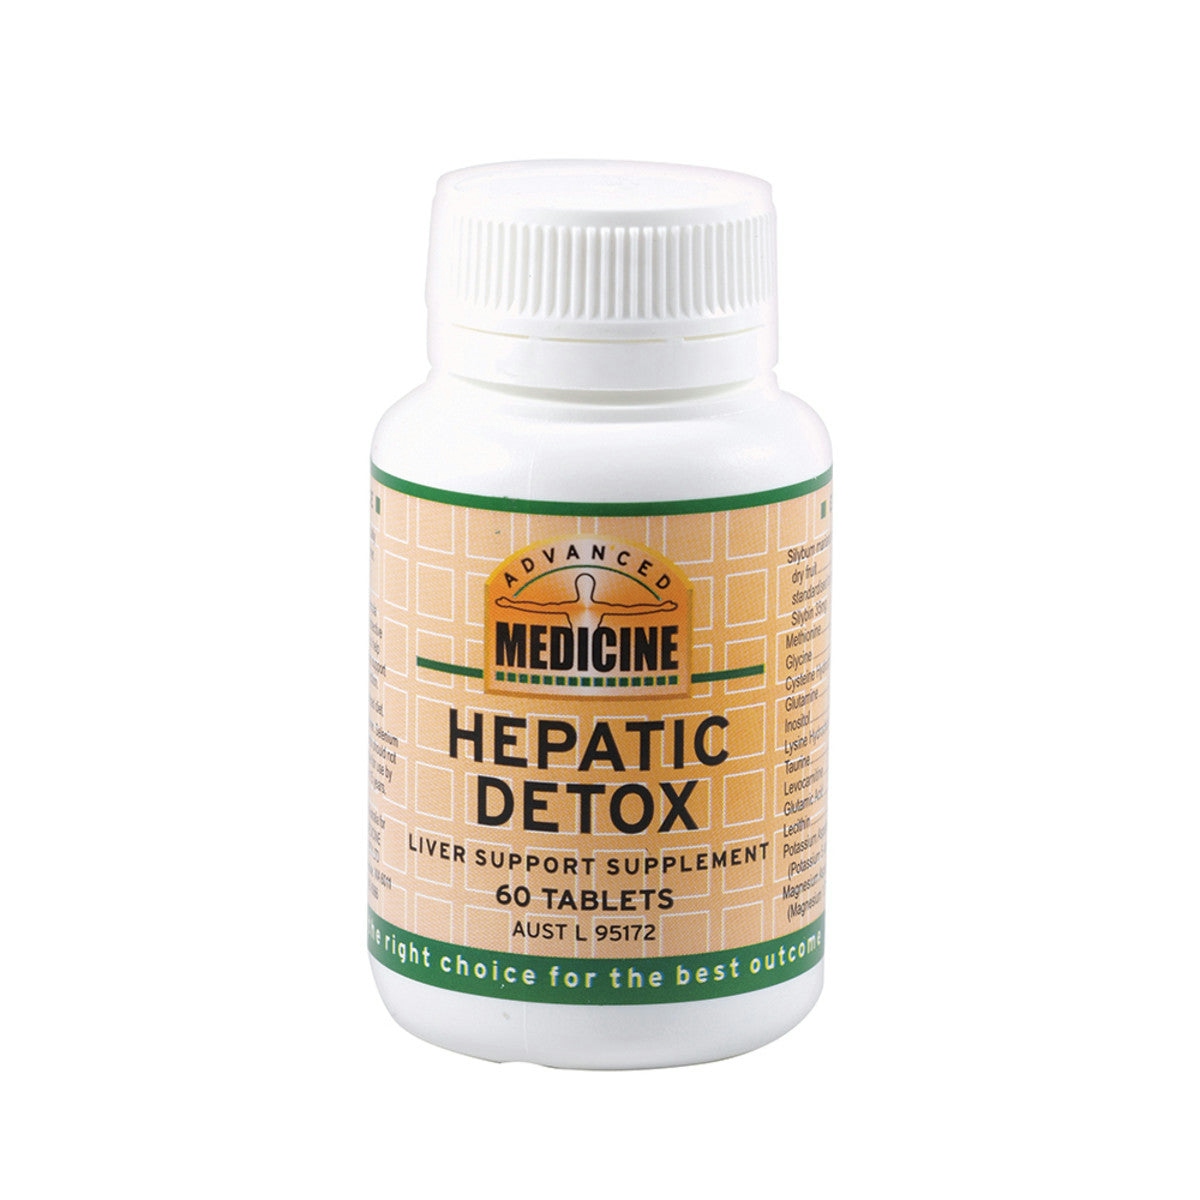 image of Advanced Medicine Hepatic Detox 60t on white background